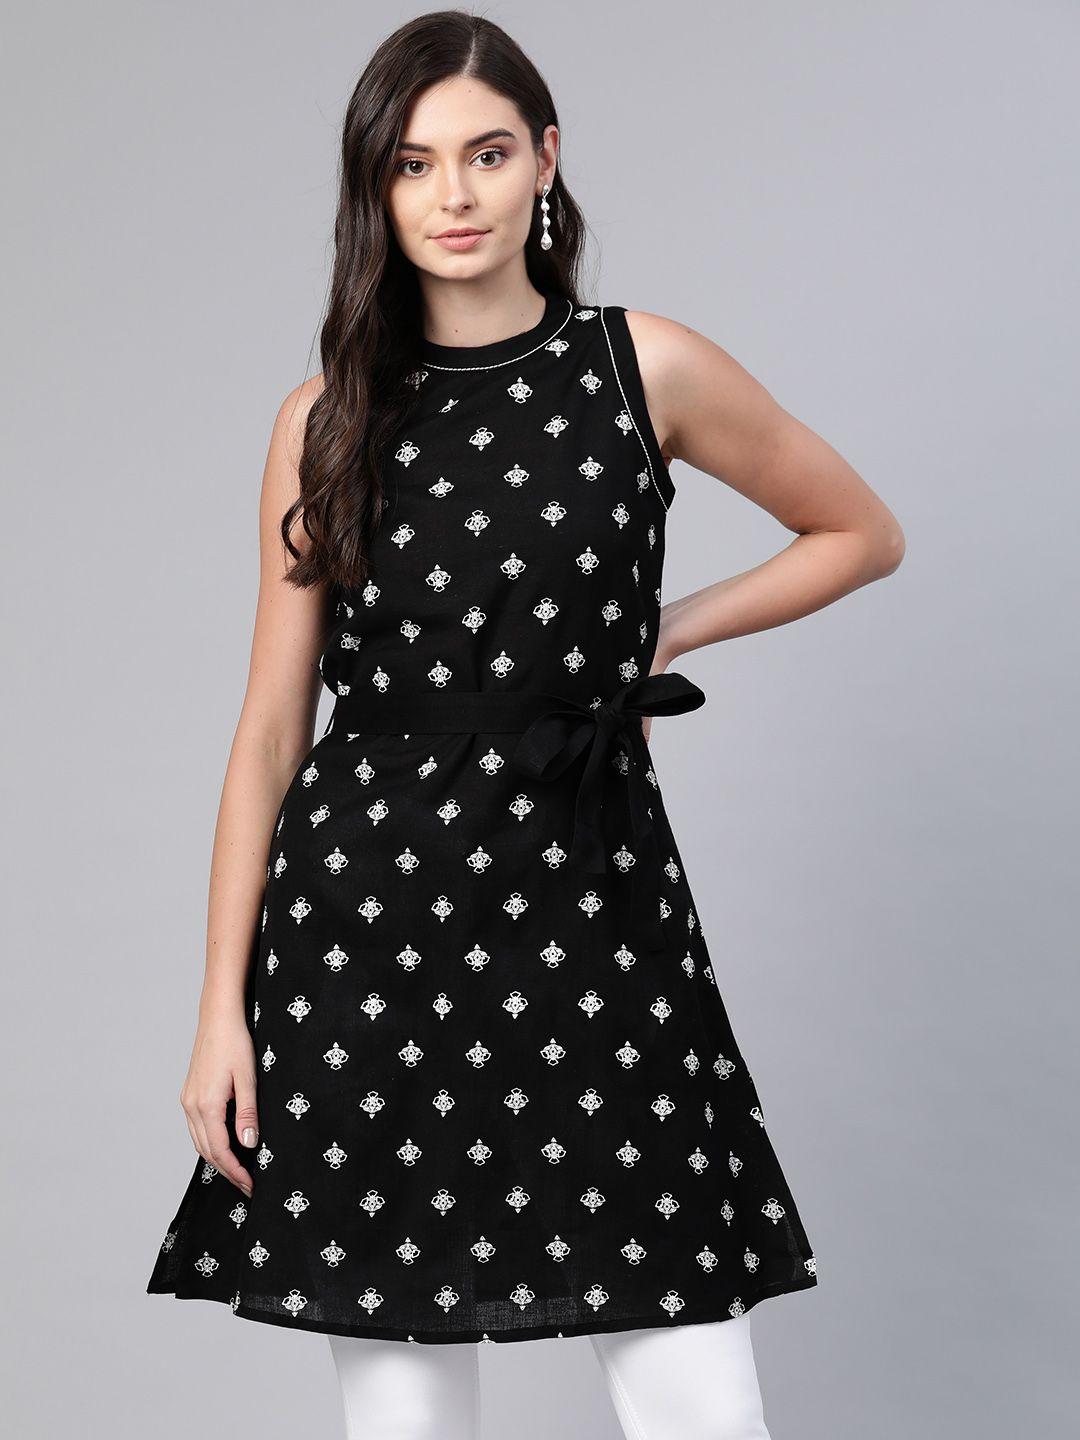 global-desi-women's-black-&-white-printed-ecovero-tunic